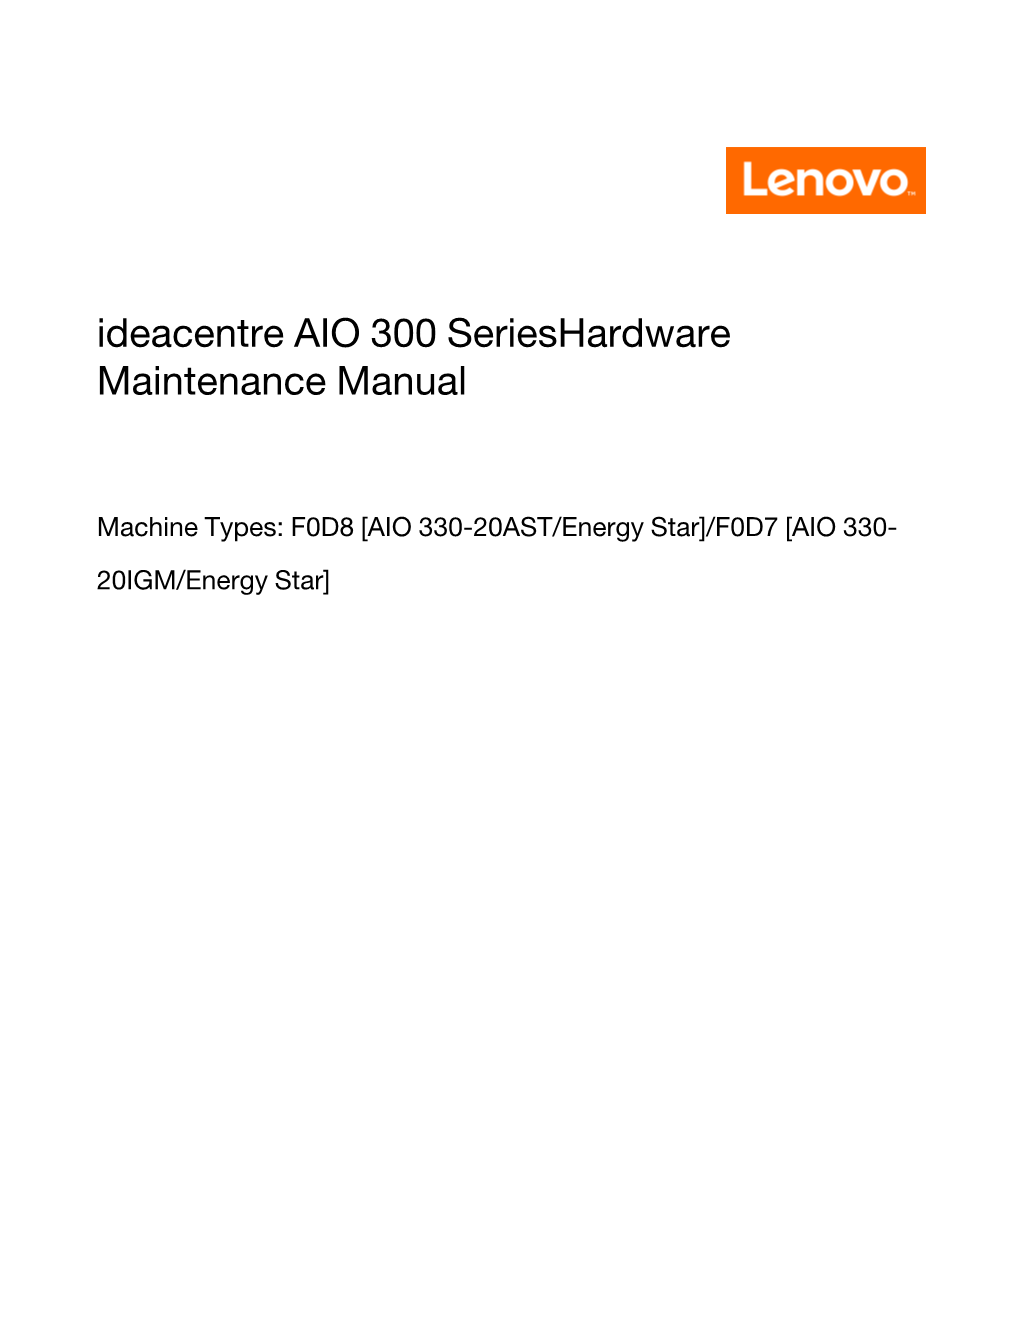 Ideacentre AIO 300 Serieshardware Maintenance Manual